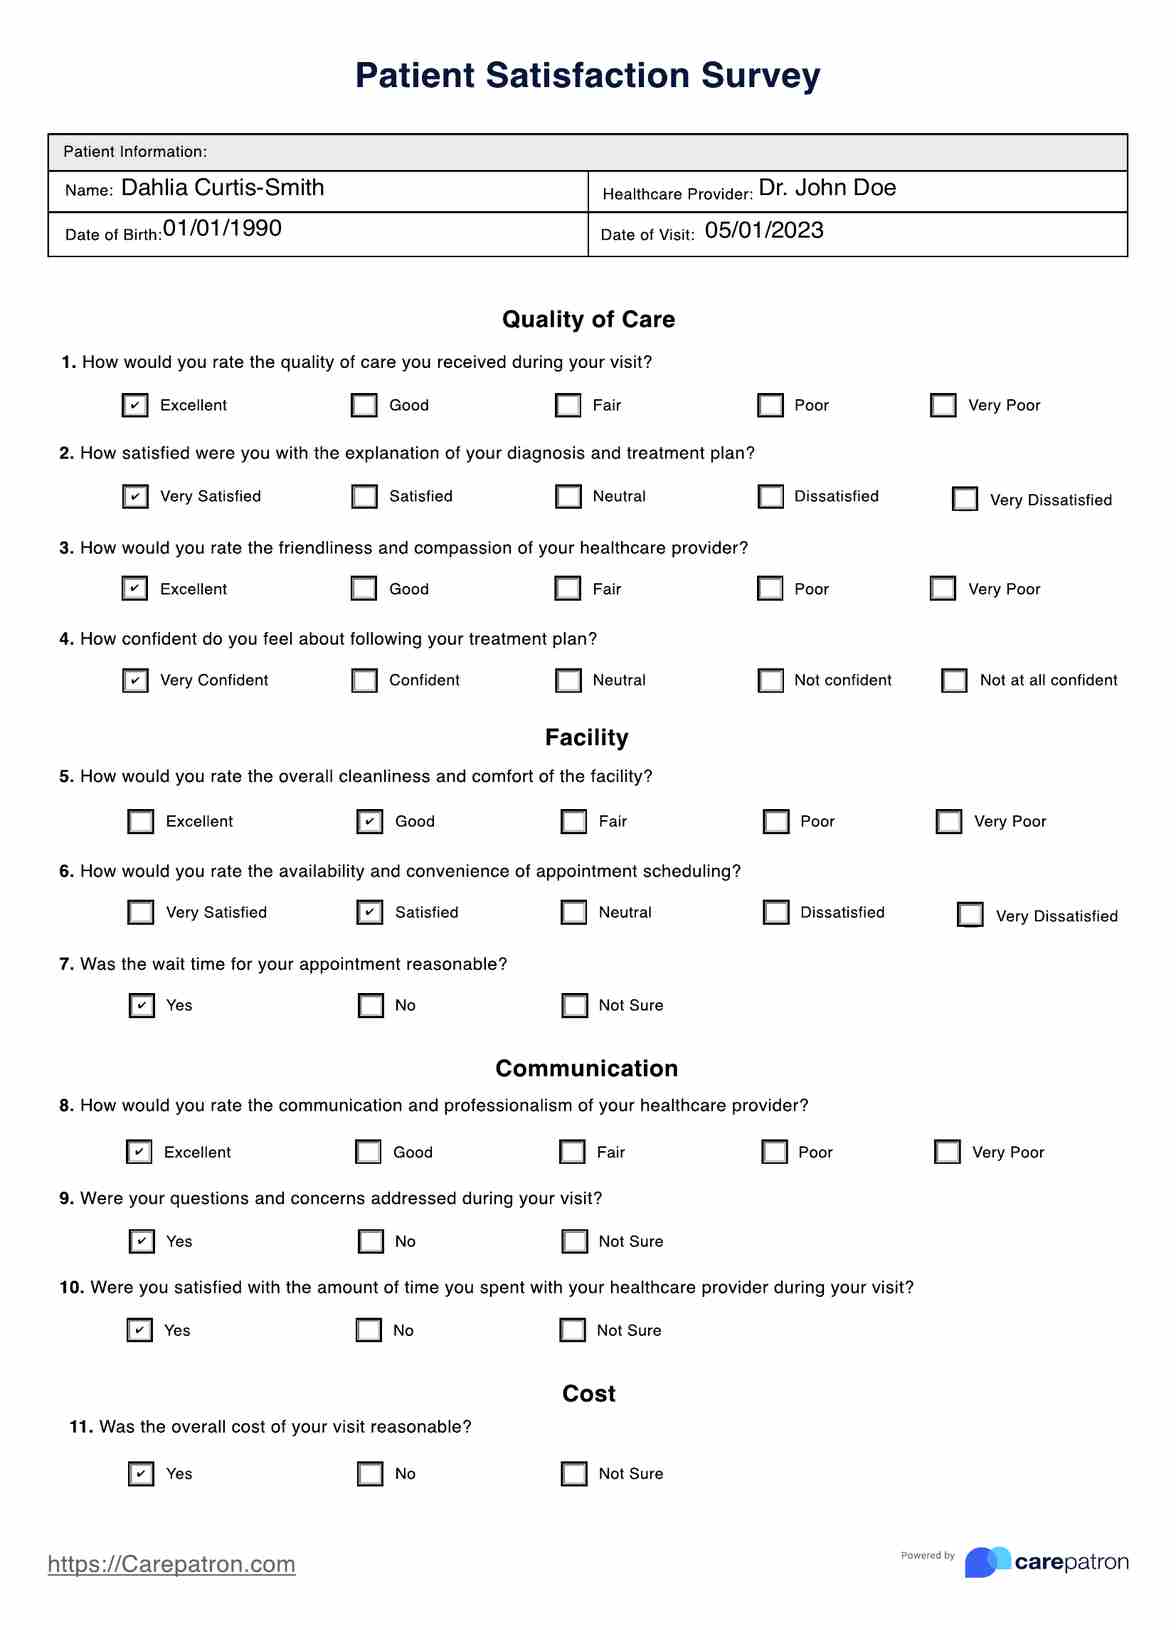 Patient Satisfaction Survey PDF Example